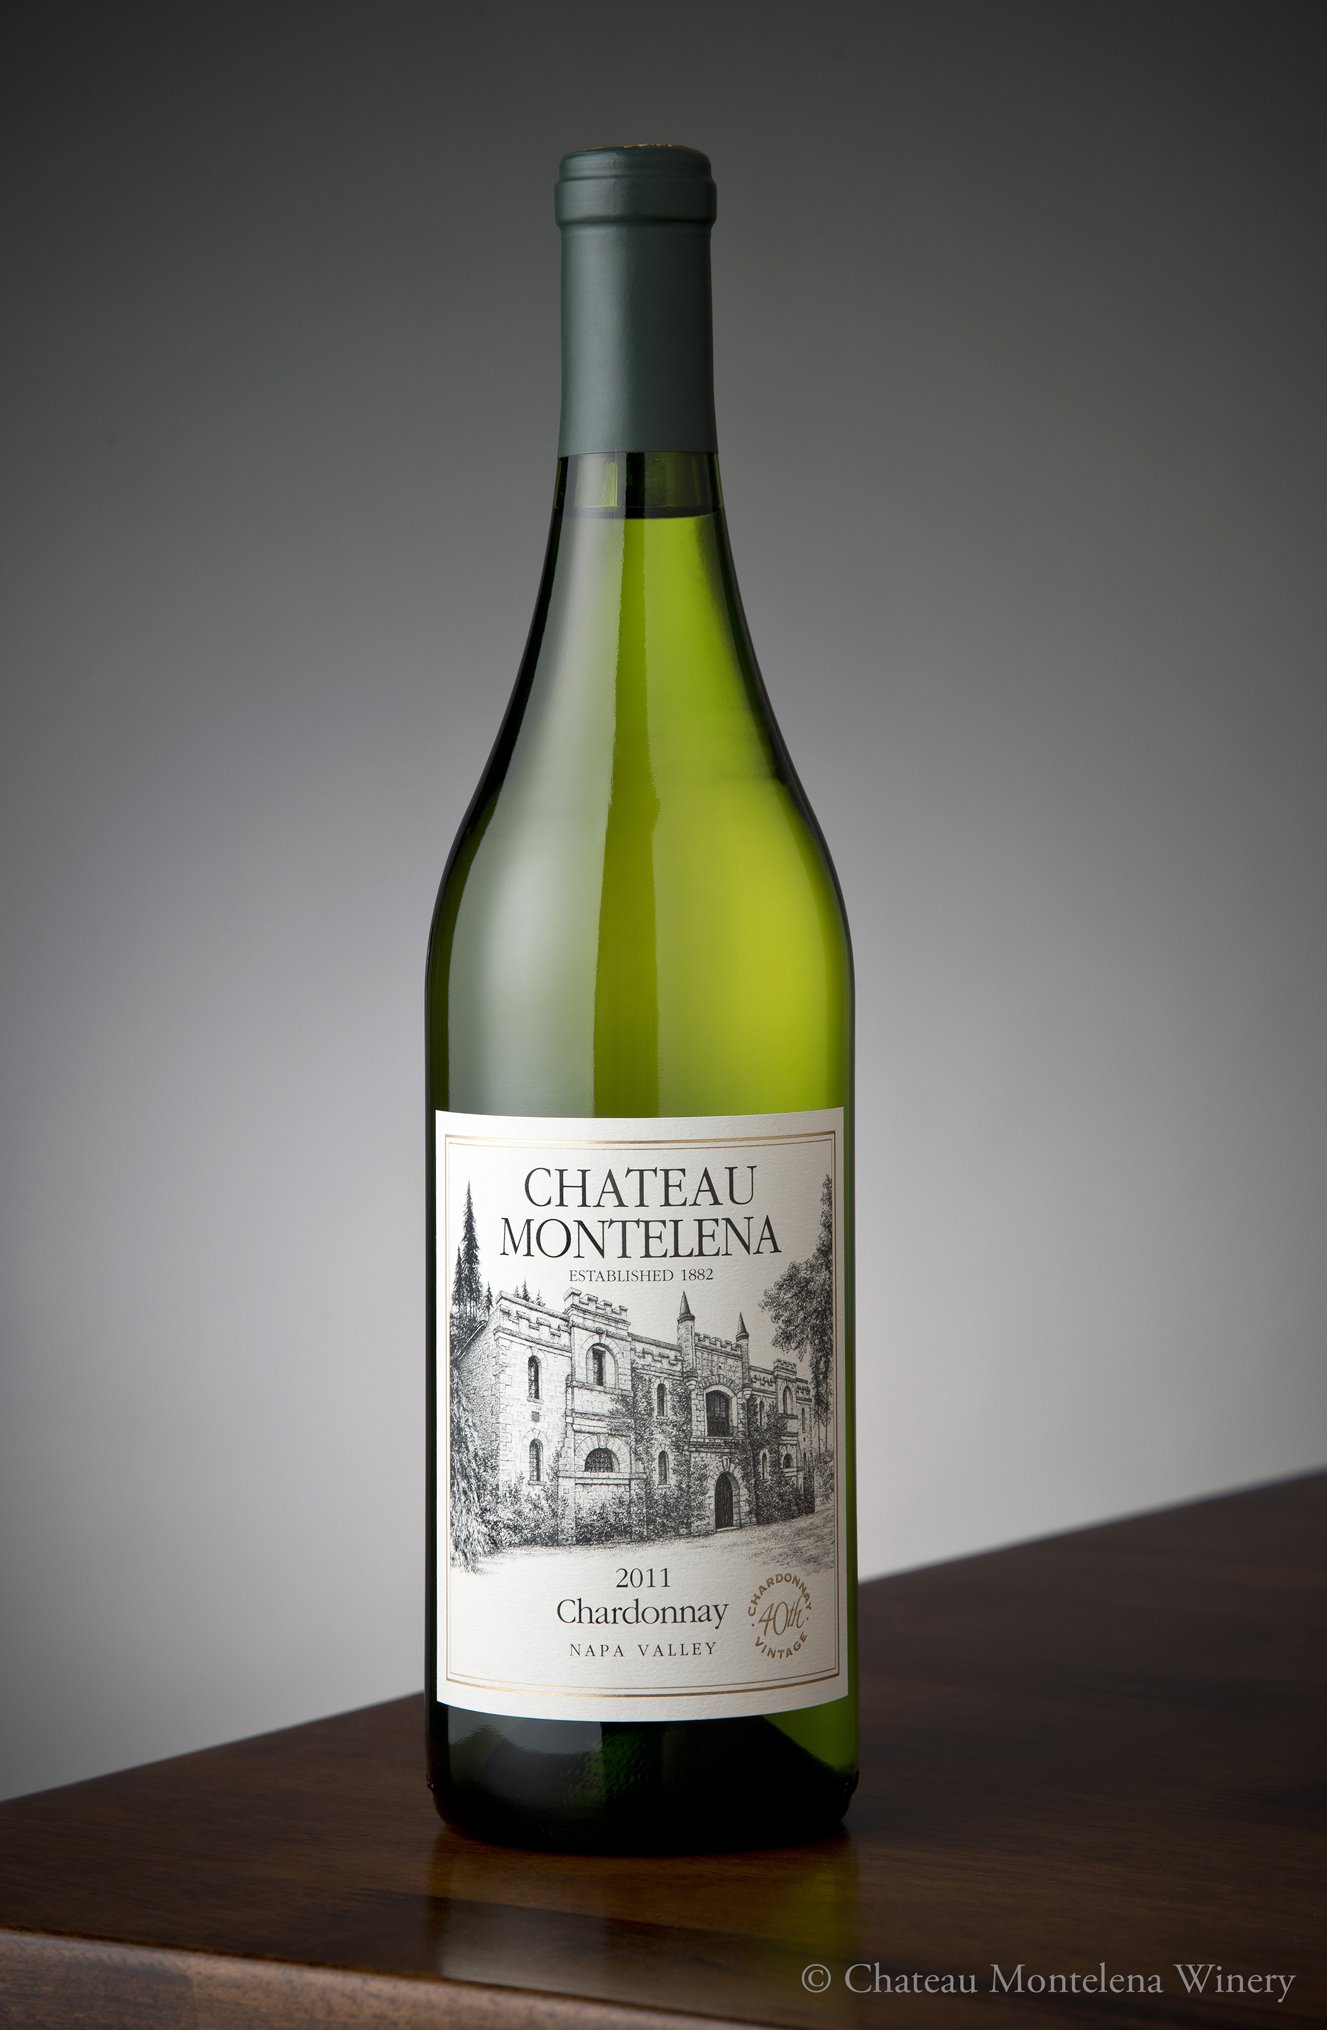 Review: 2011 Chateau Montelena Chardonnay Napa Valley